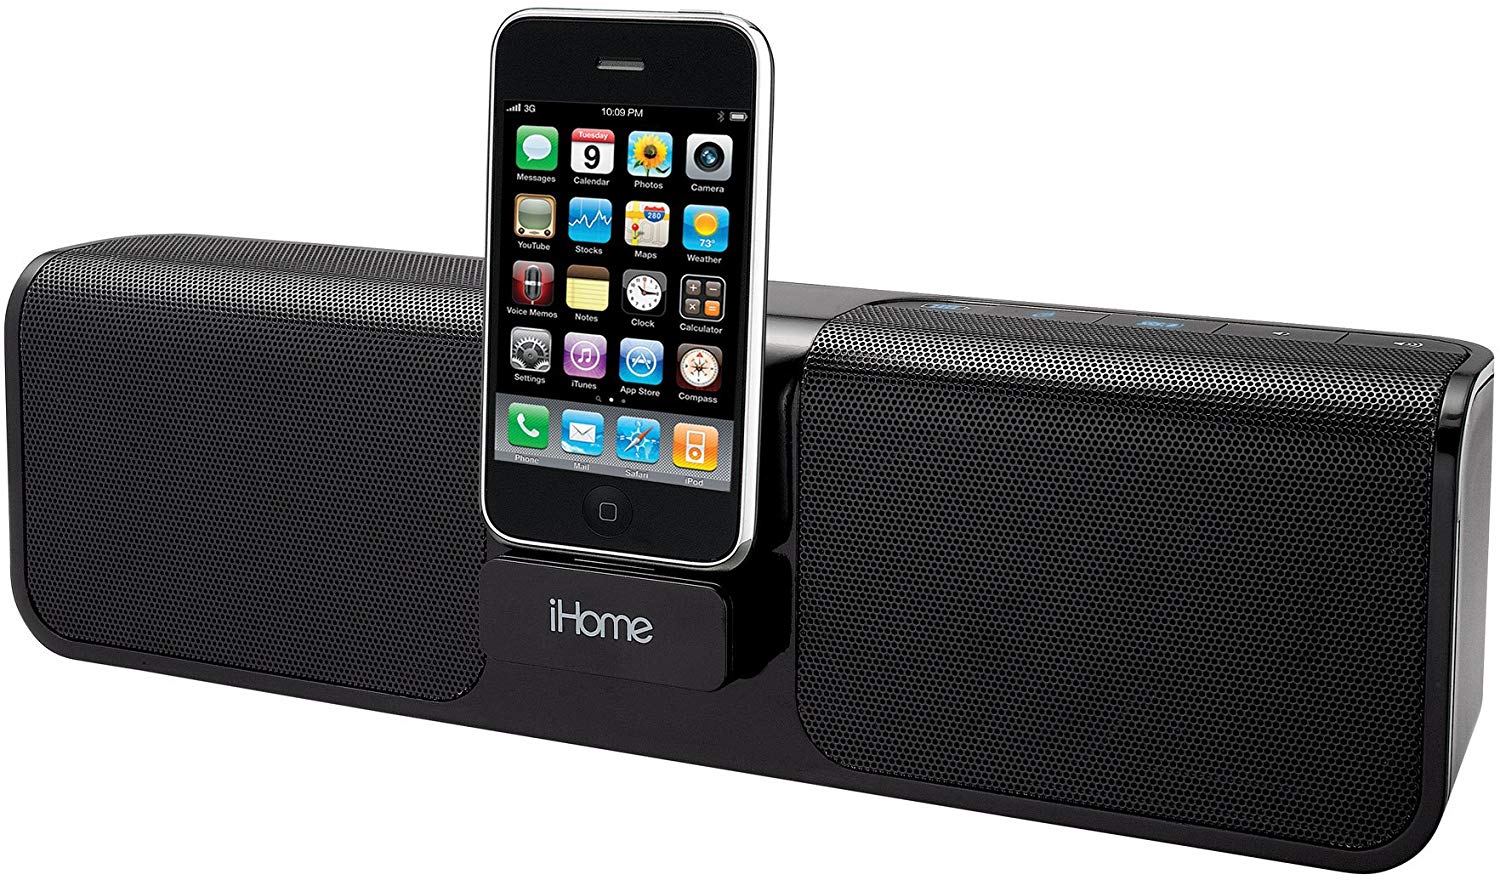 Like New iHome iP46 30 Pin iPhone/iPod Speaker Dock Charging Sound